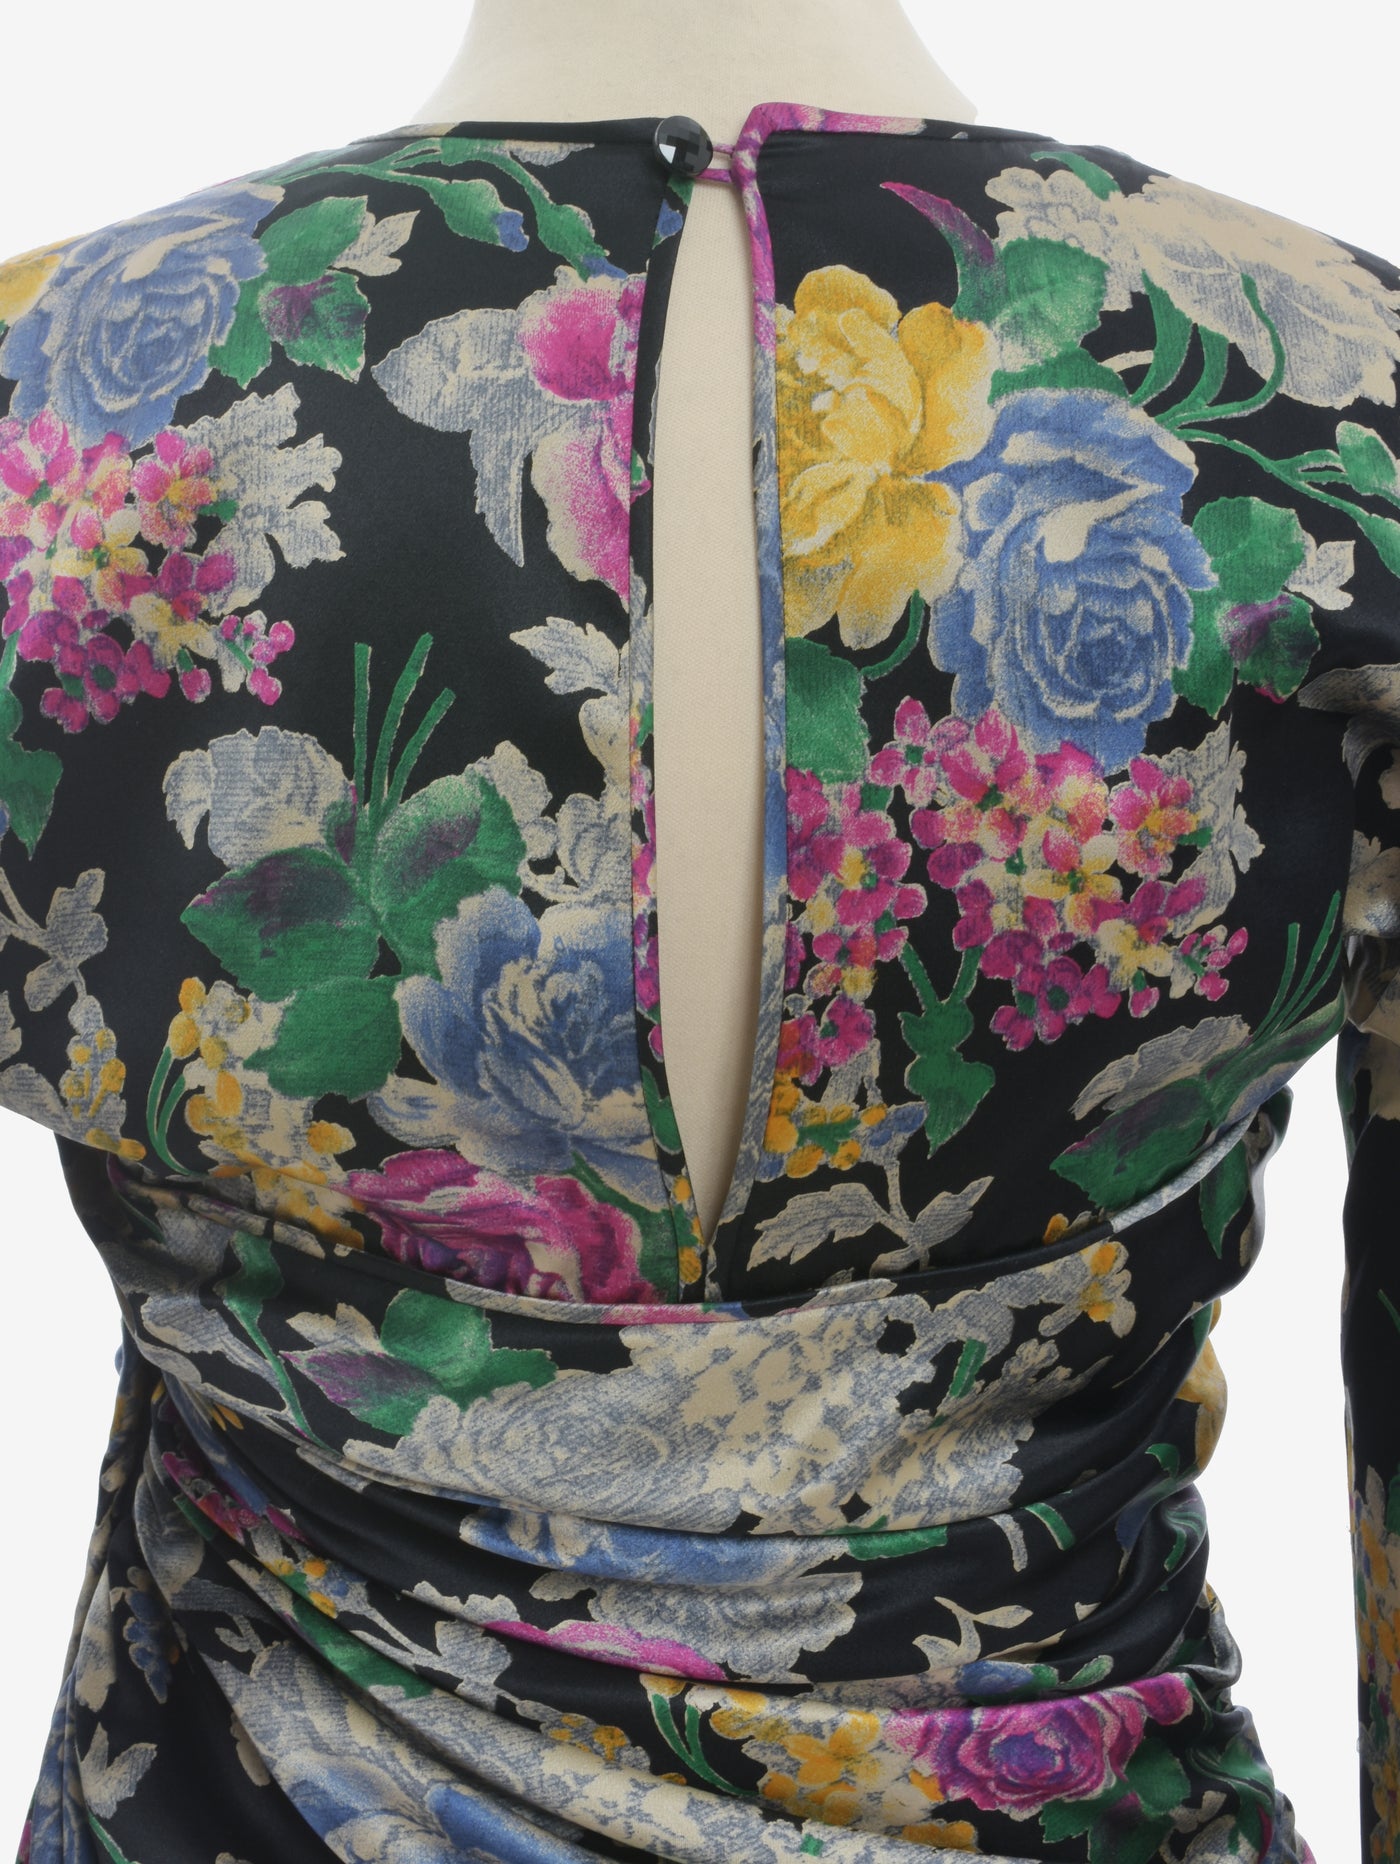 Ungaro Flower Print Dress - '80s<BR/>